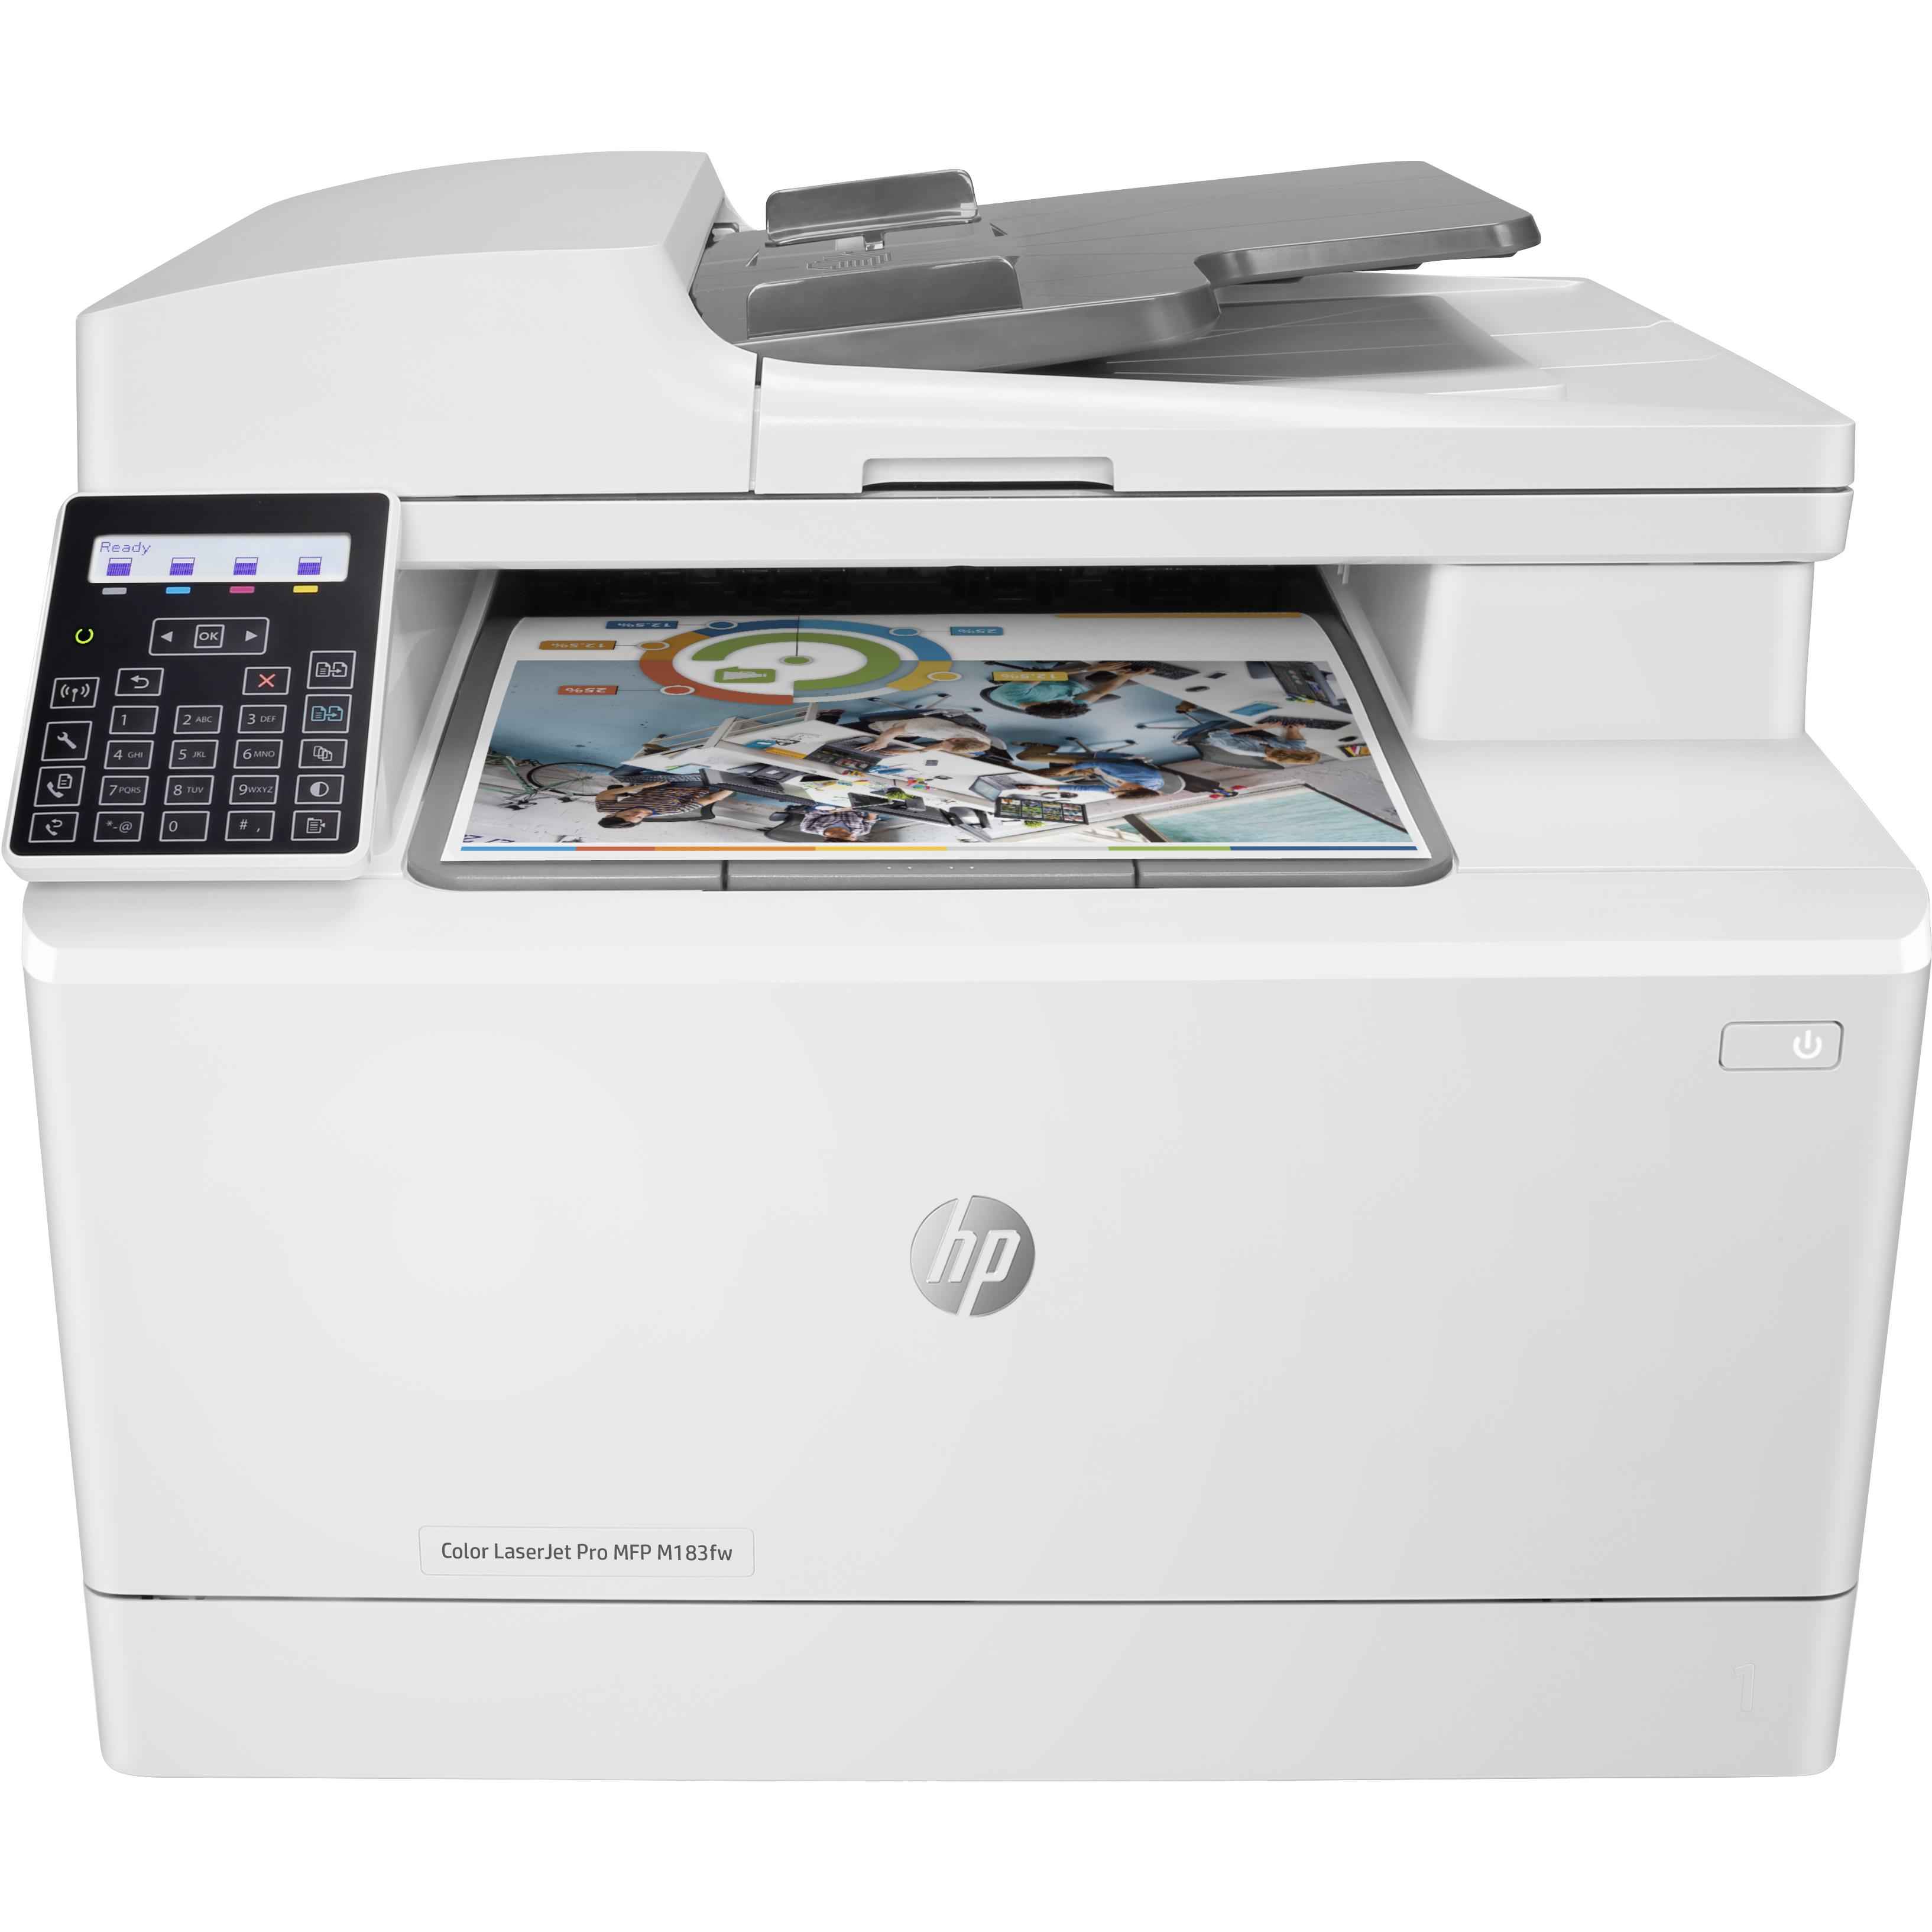 HP Color LaserJet Pro MFP M183fw Color Printer for Print Copy Scan Fax 35-she...